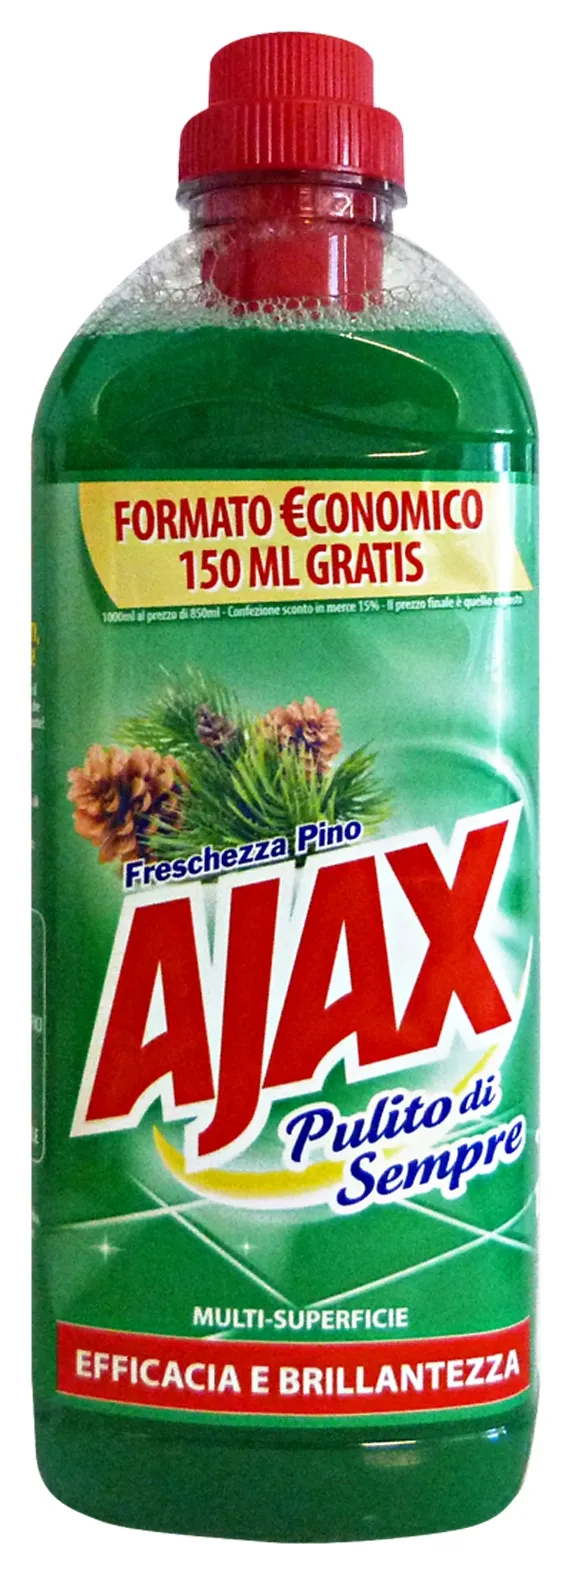 "AJAX Pavimenti Freschezza Pino 1 Lt. Detergenti Casa"